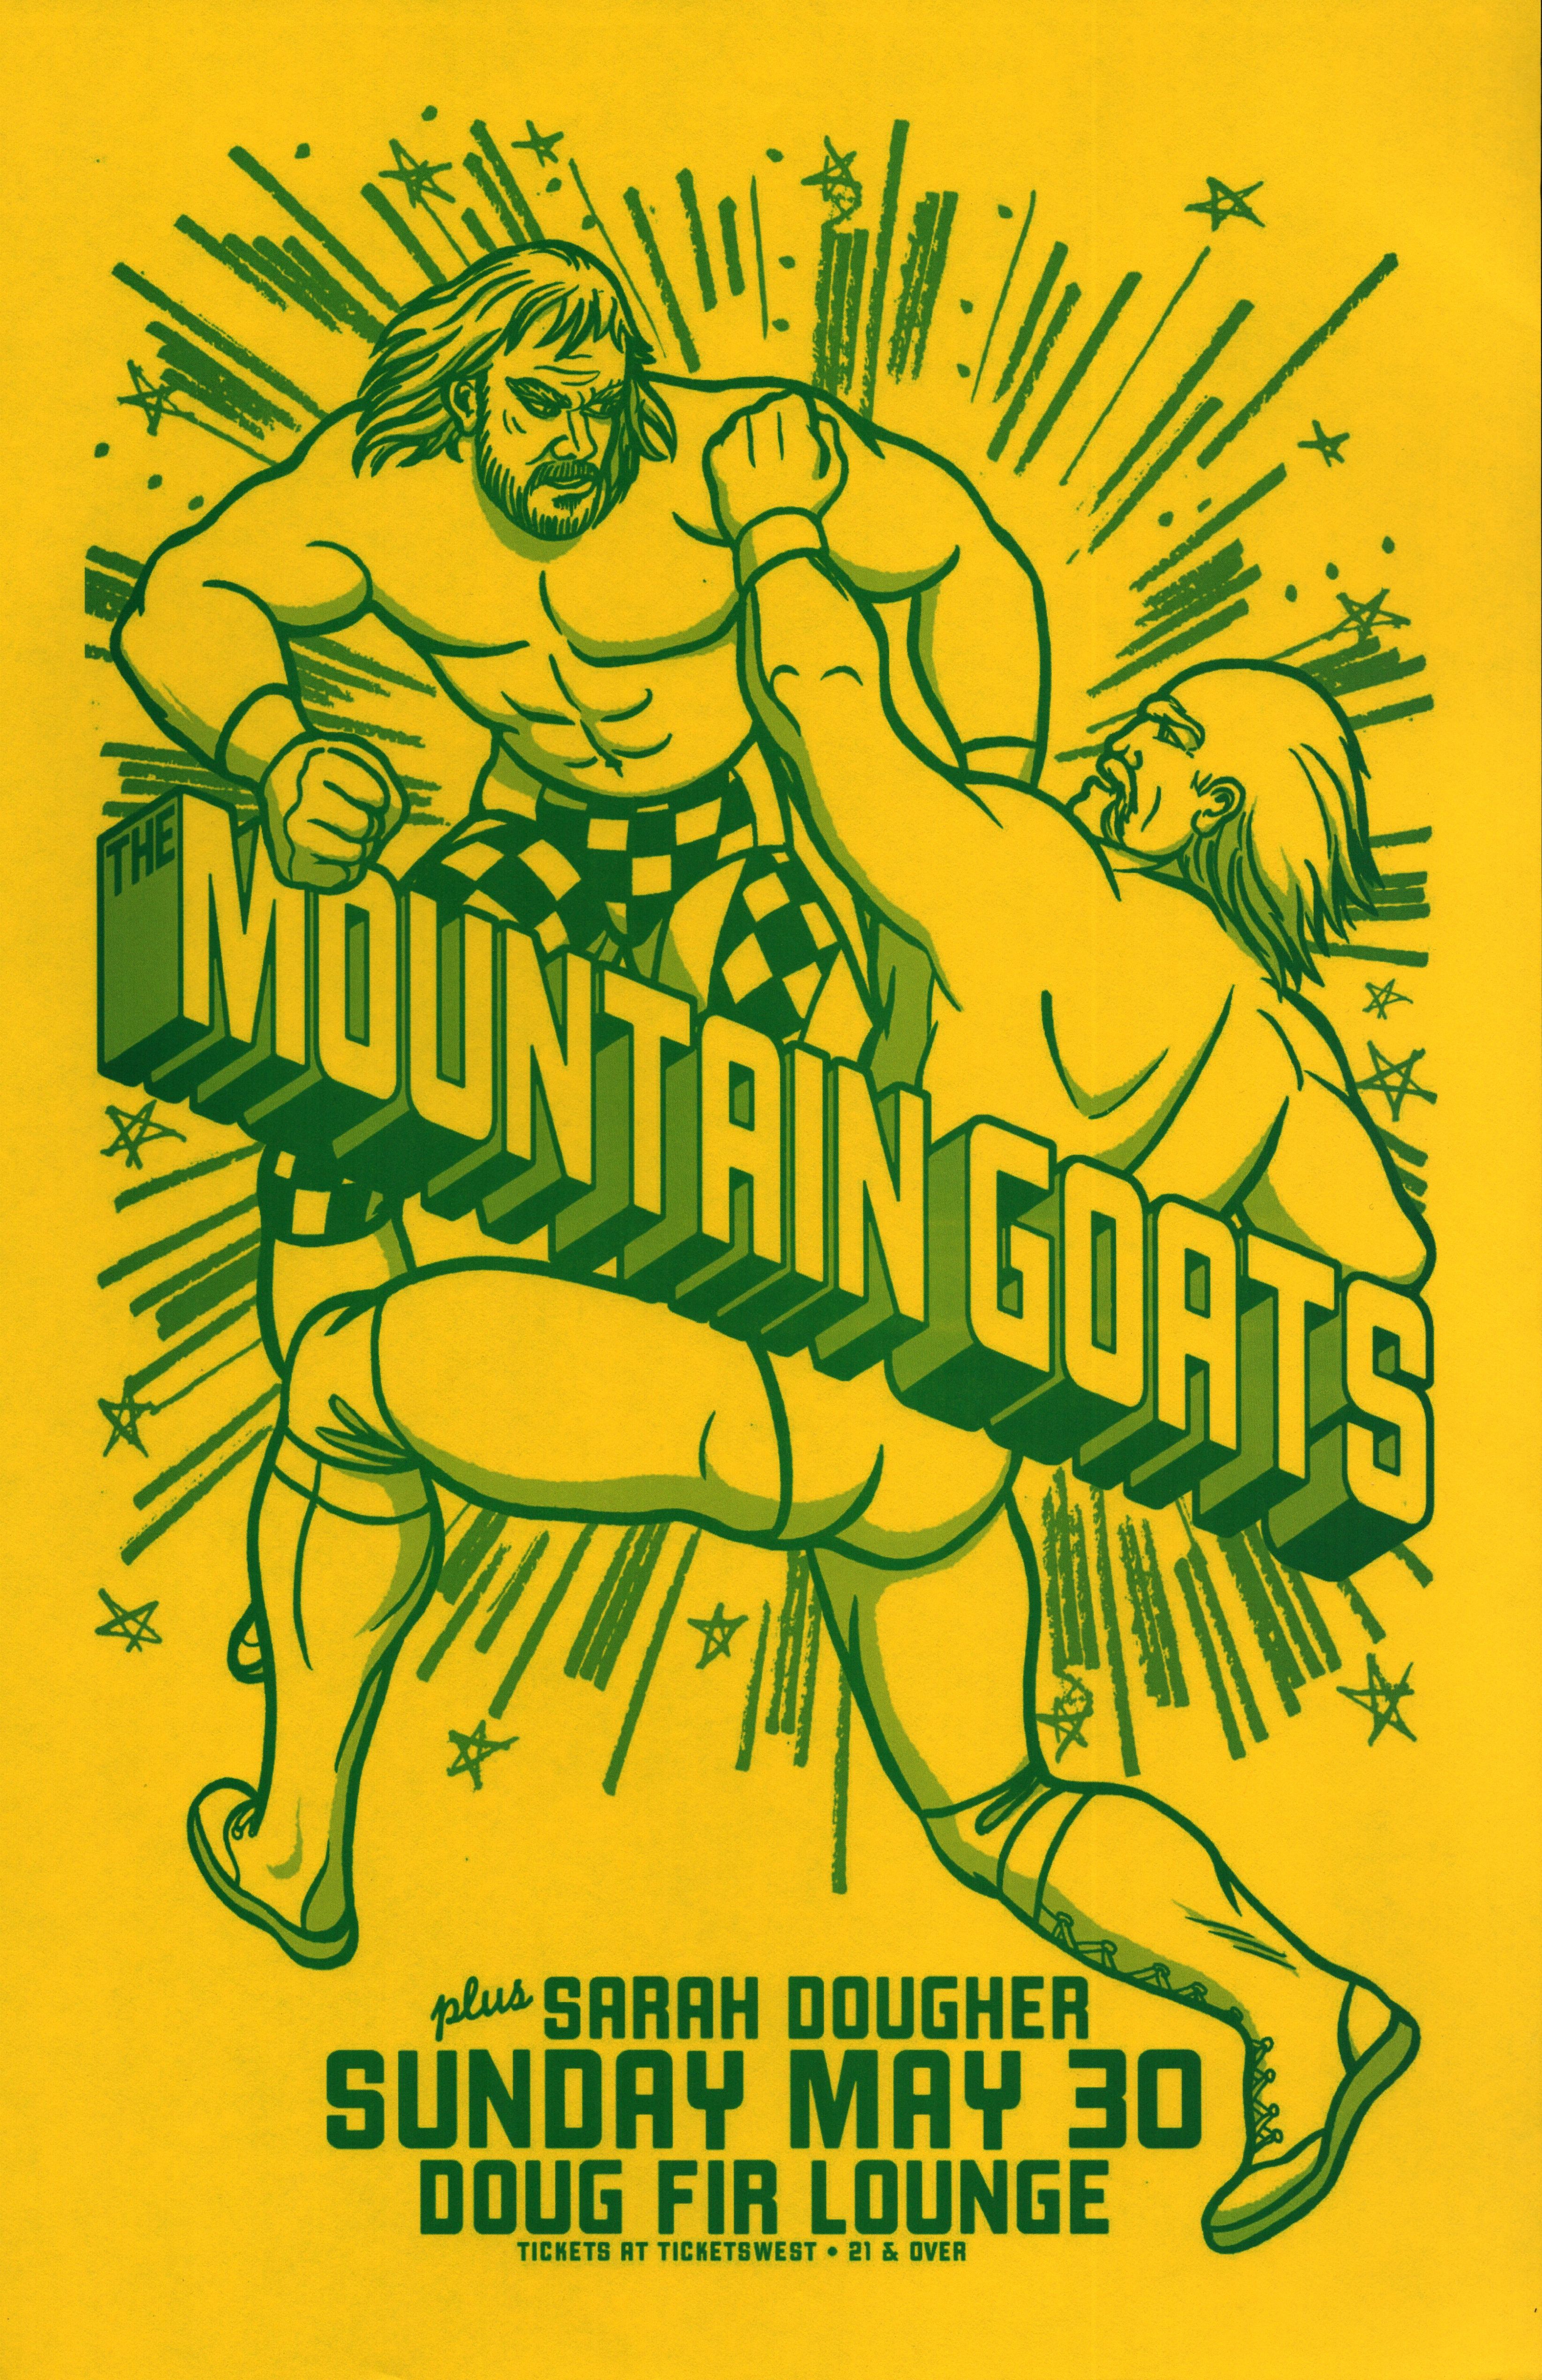 MXP-142.28 Mountain Goats Doug Fir 2010 Concert Poster